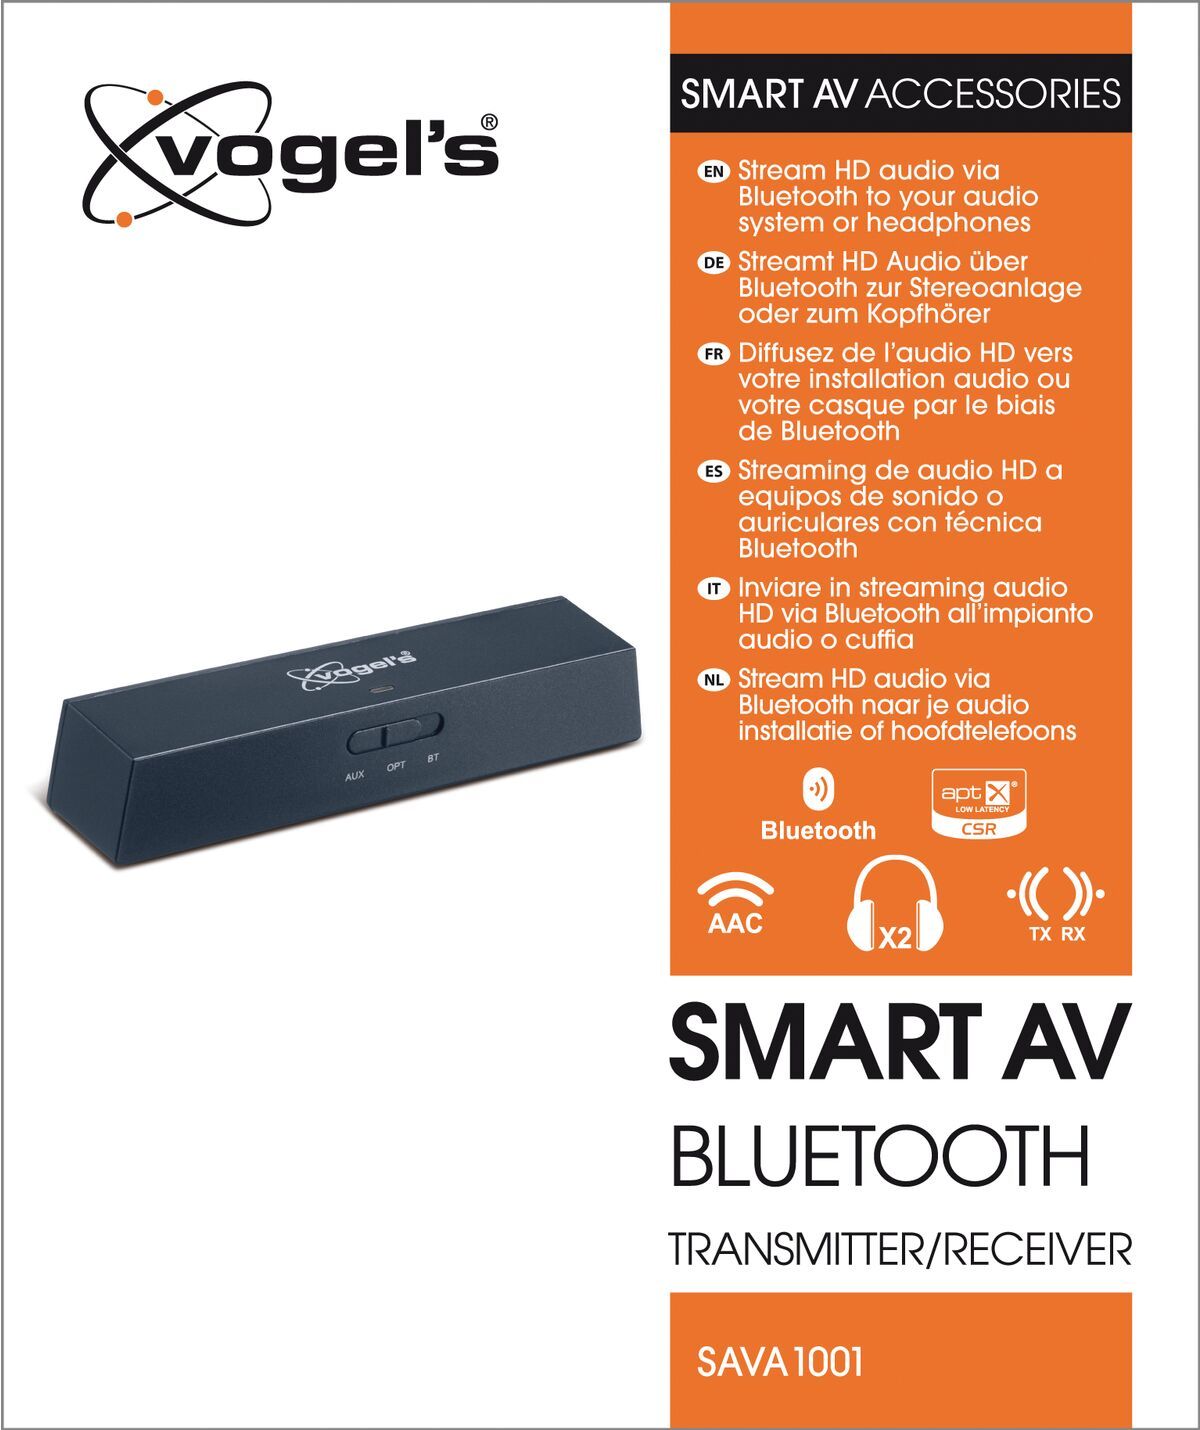 Vogel's SAVA 1001 Smart AV Bluetooth transmitter/receiver - Packaging front